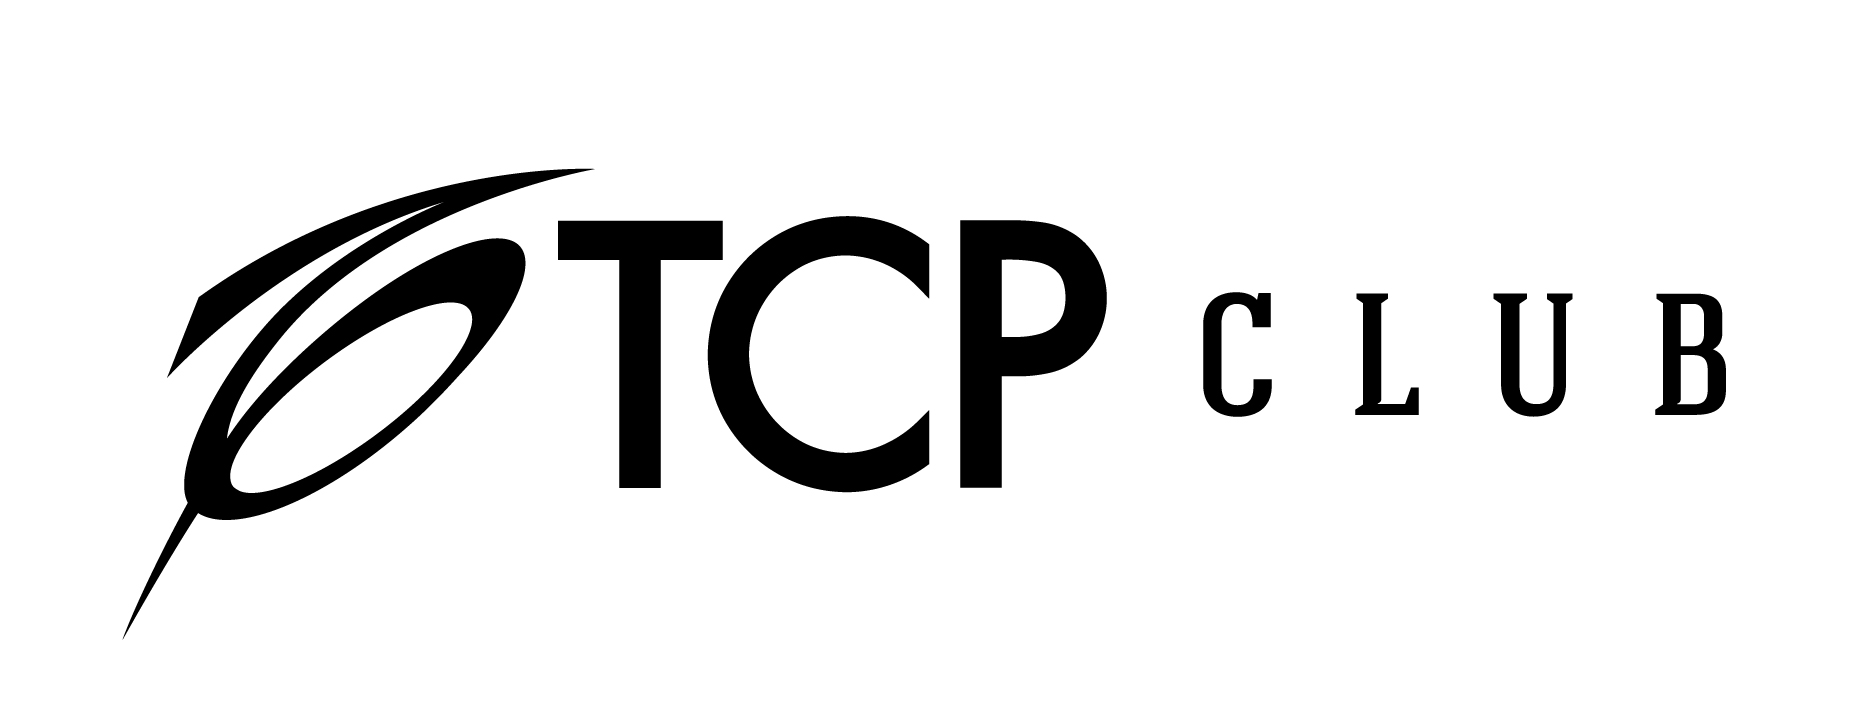 21_STAD_TCP Club Logo Horiz_FNL